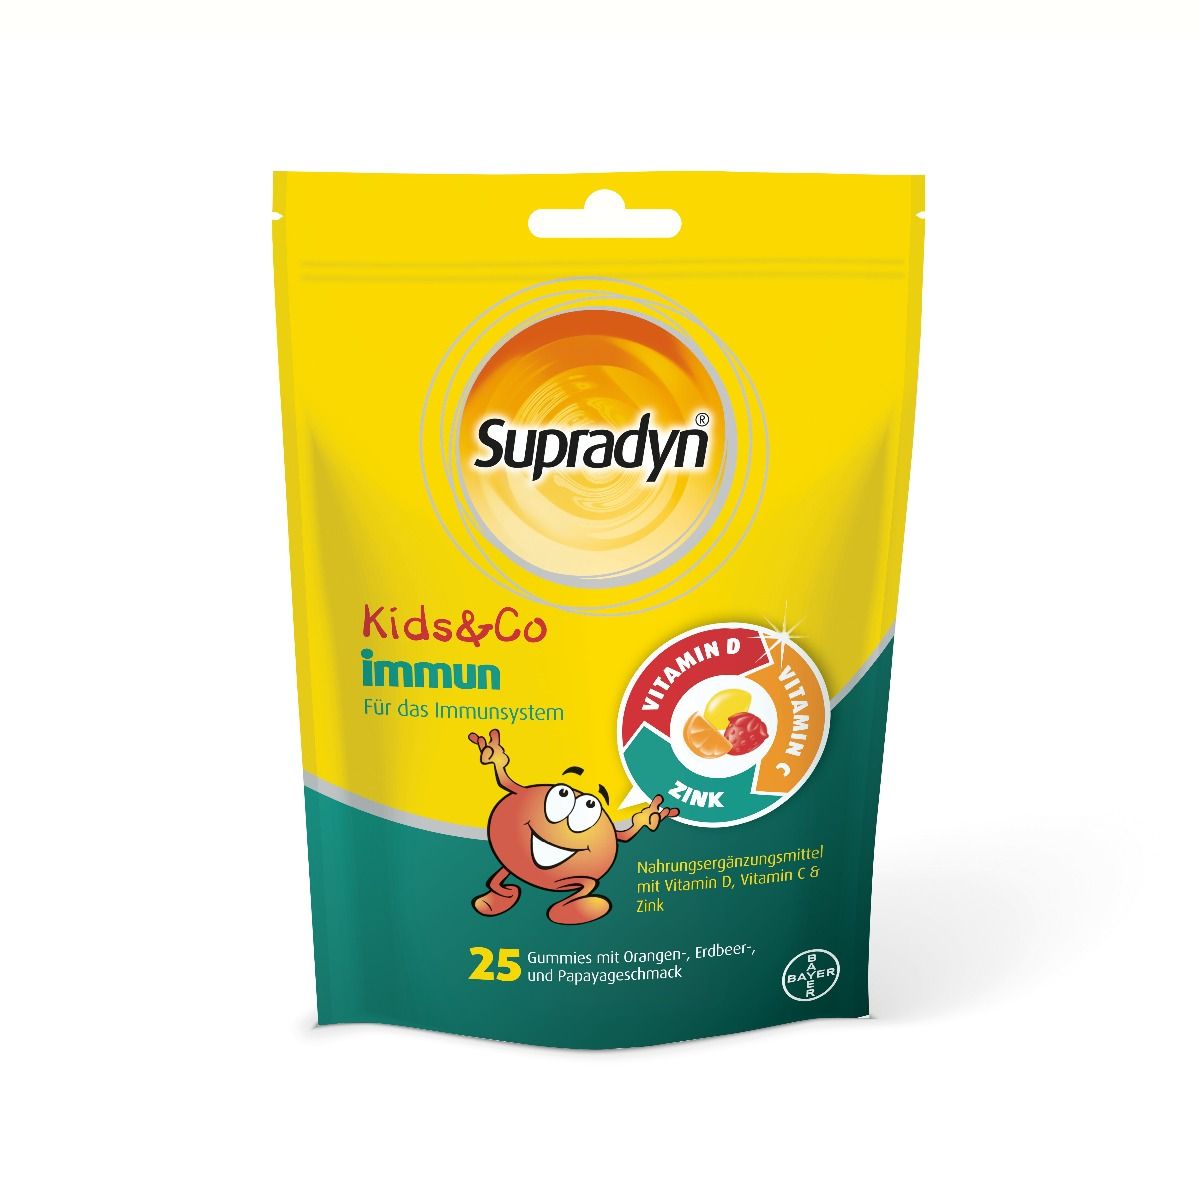 Supradyn® Kids&Co immun